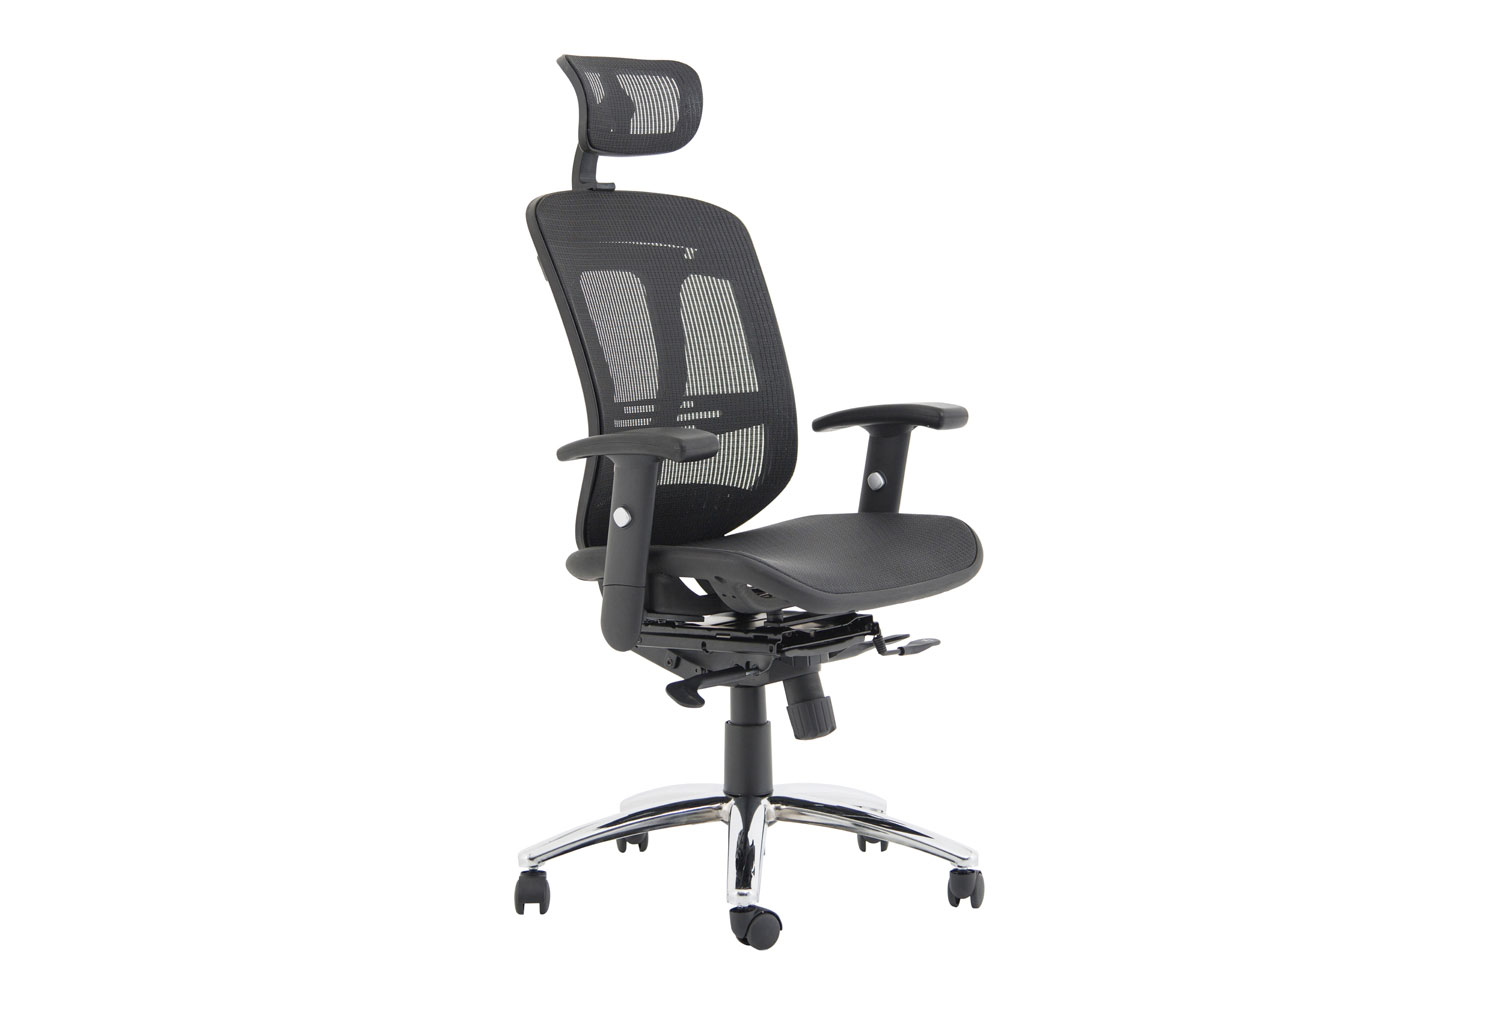 Hampton Executive Mesh Chair With Headrest